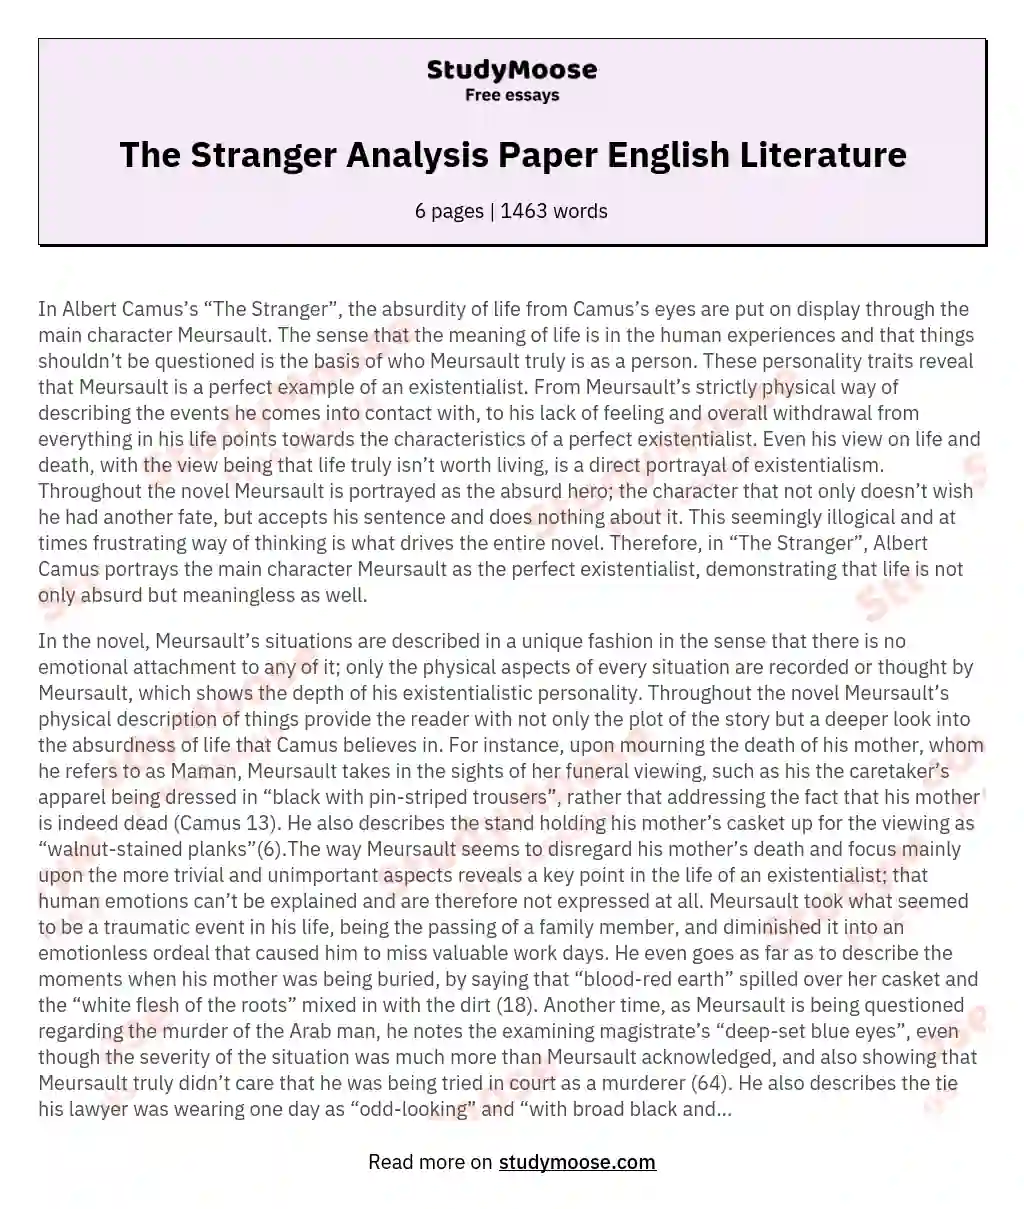 The Stranger Analysis Paper English Literature essay